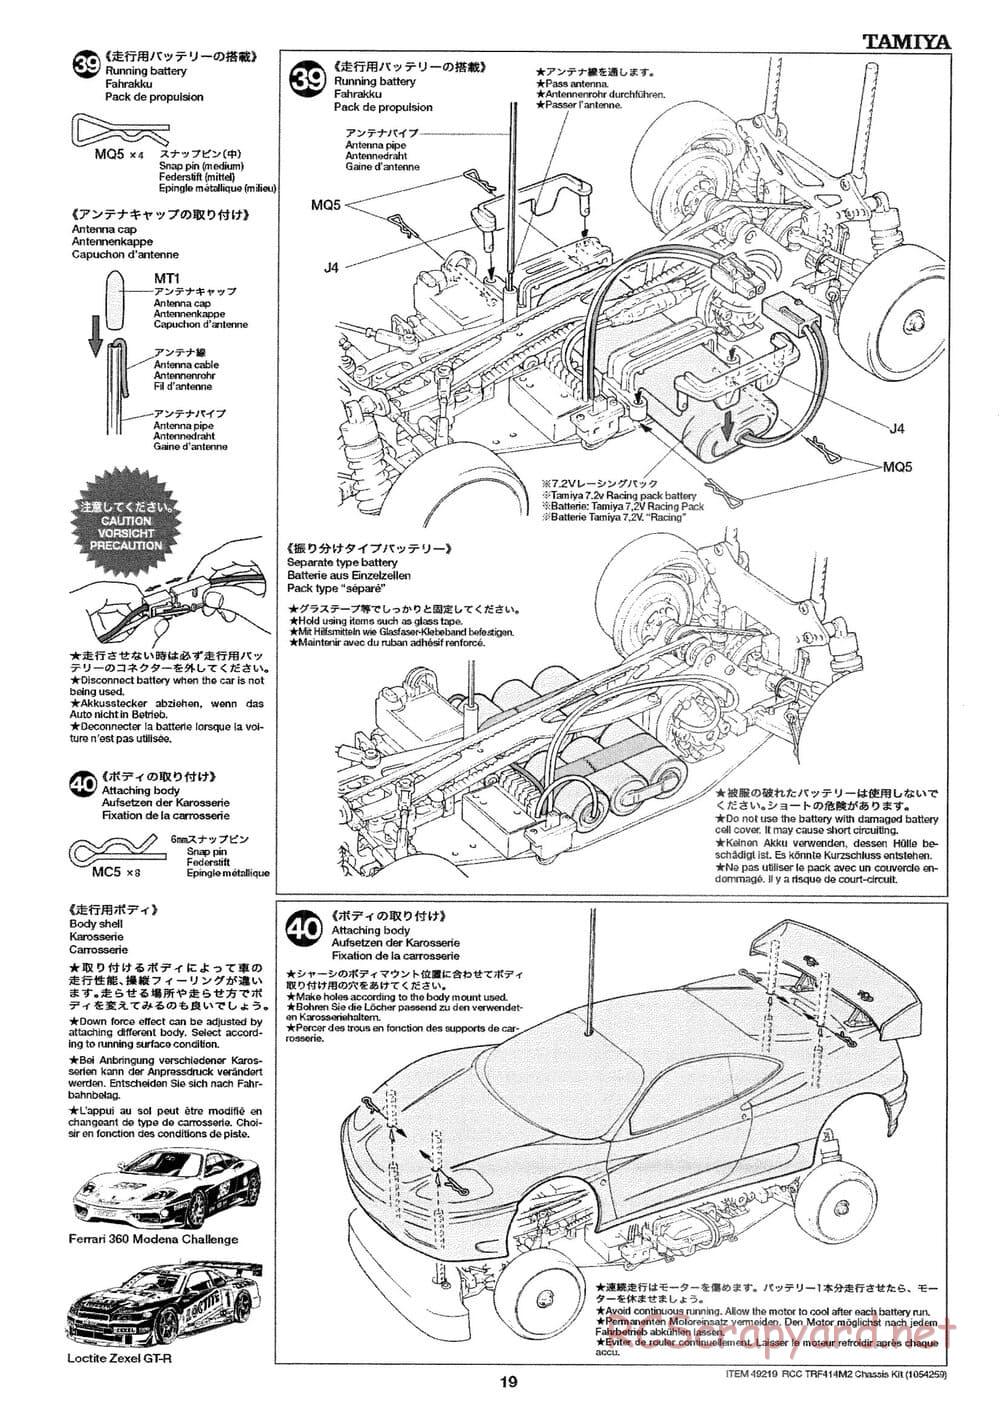 Tamiya - TRF414M II Chassis - Manual - Page 19